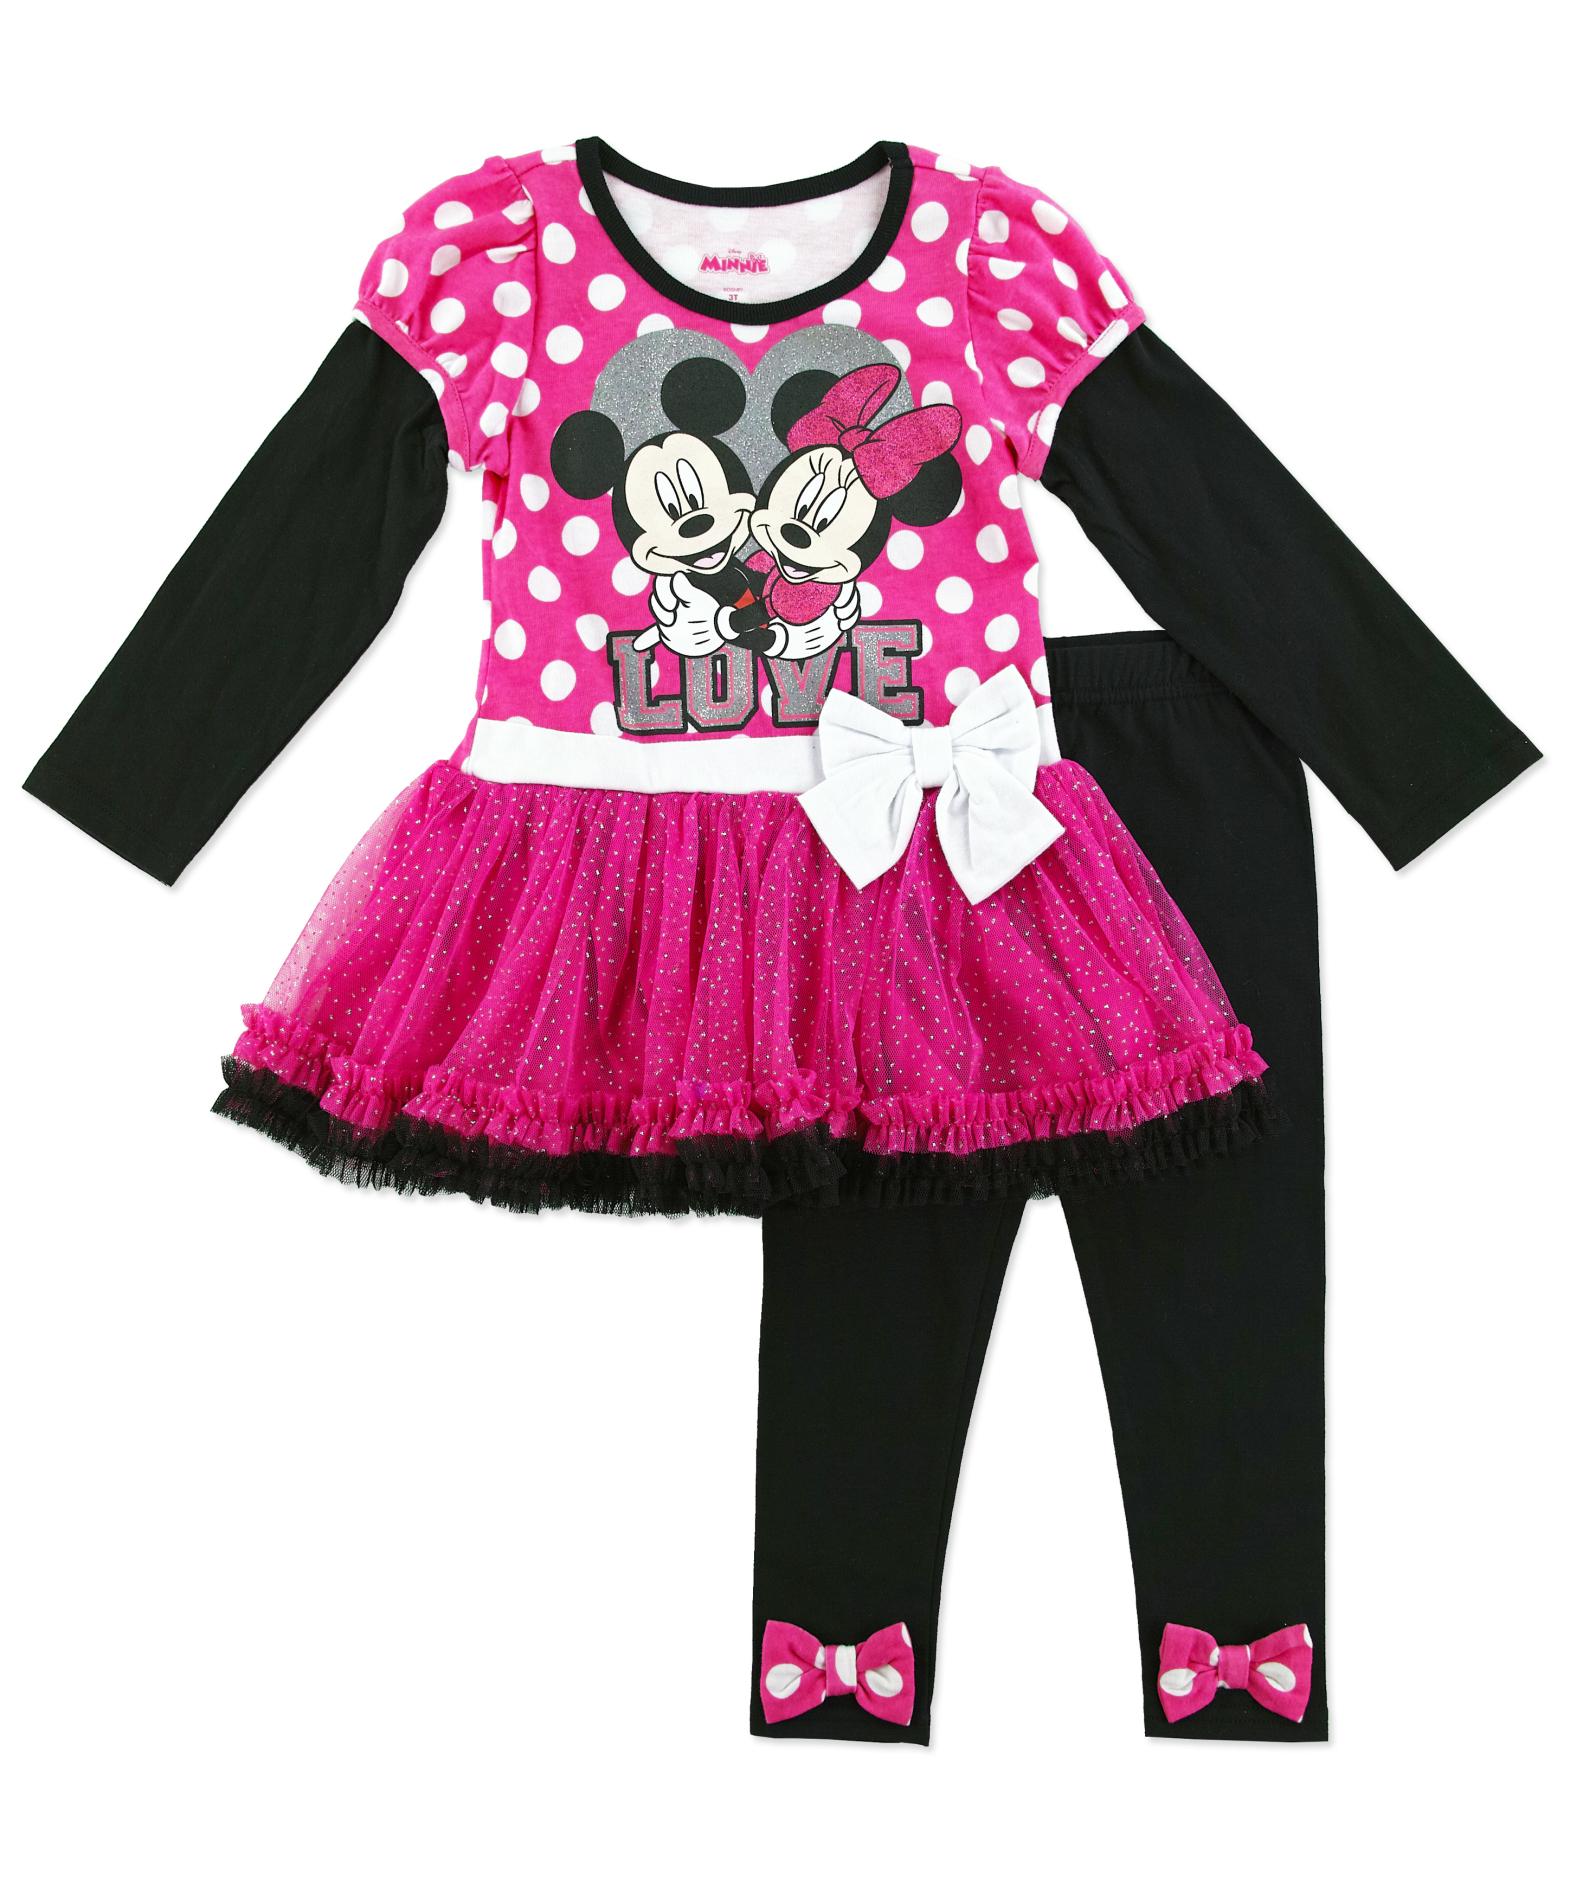 Disney Minnie Mouse Toddler Girl's Top & Leggings